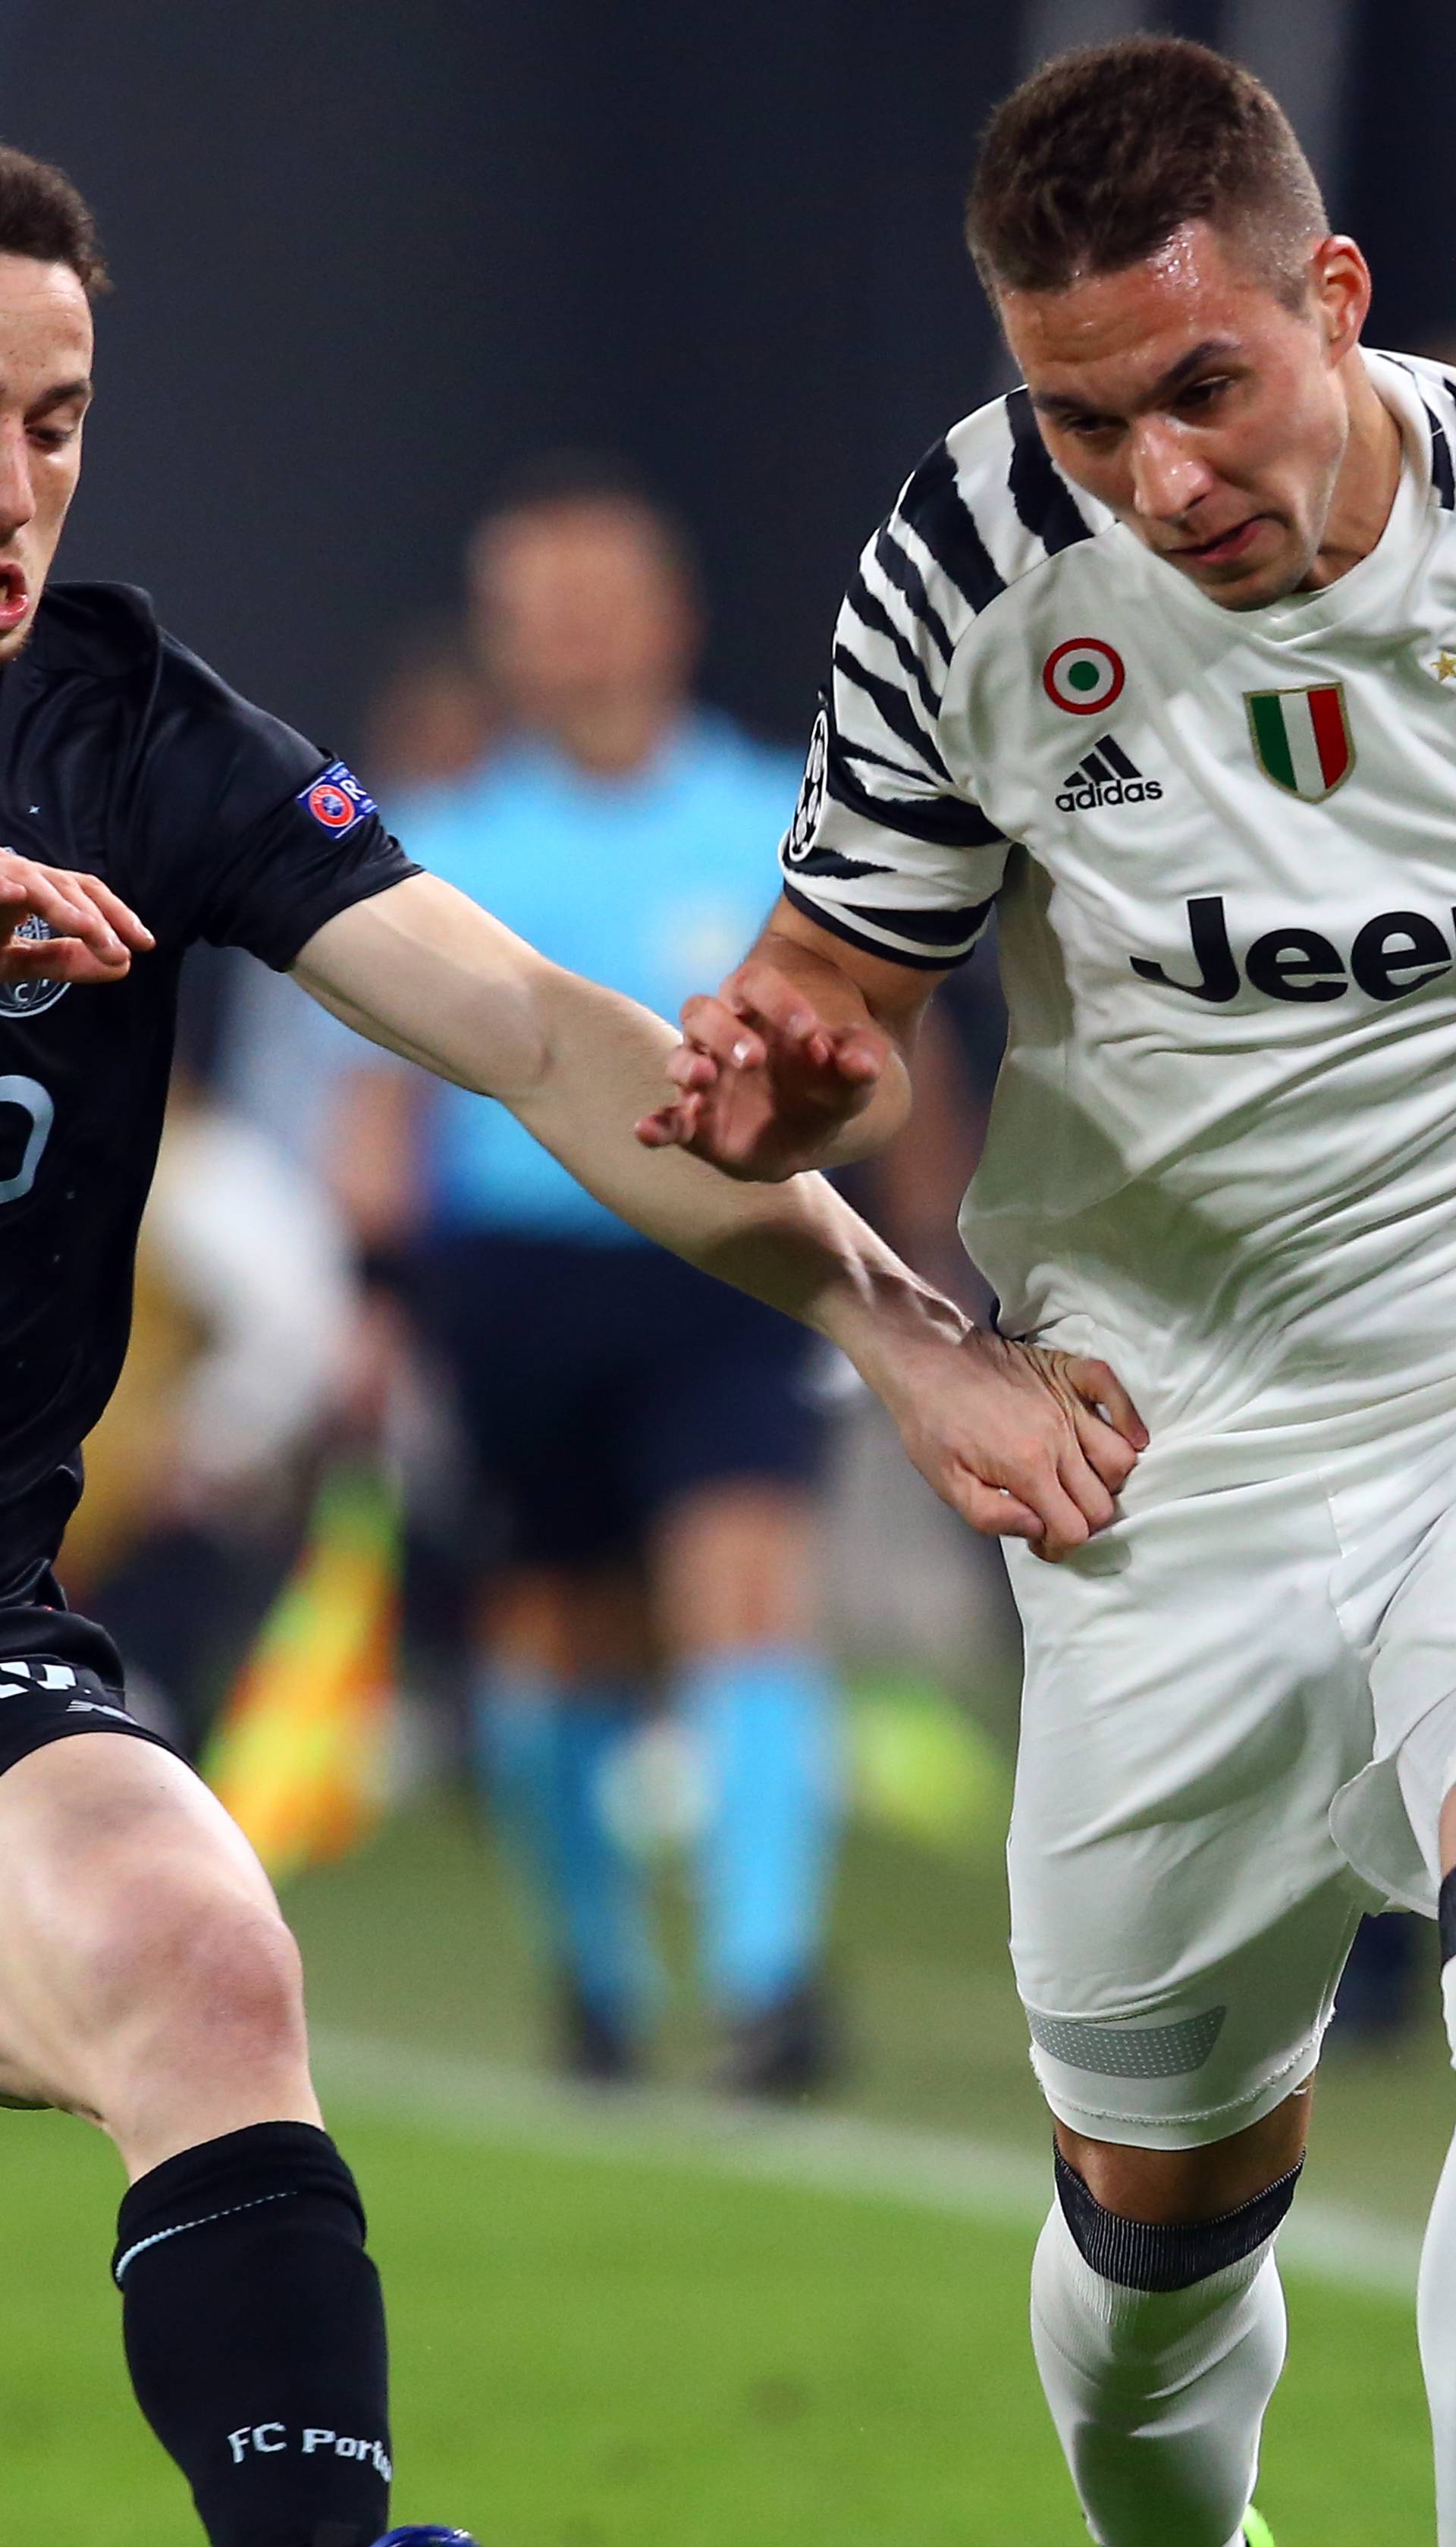 FC Porto's Diogo Jota in action with Juventus' Marko Pjaca